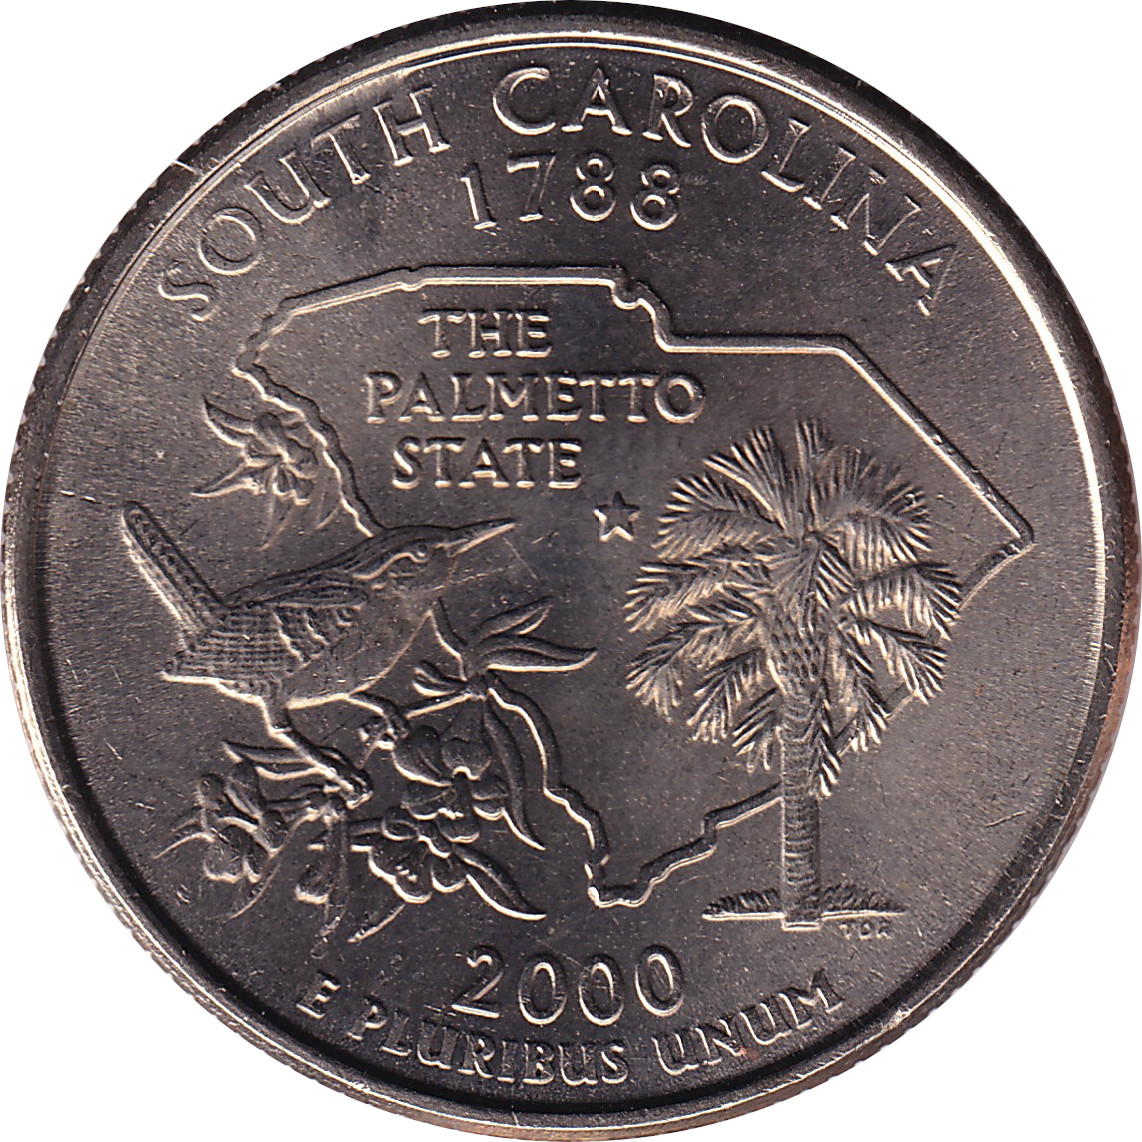 1/4 dollar - South Carolina